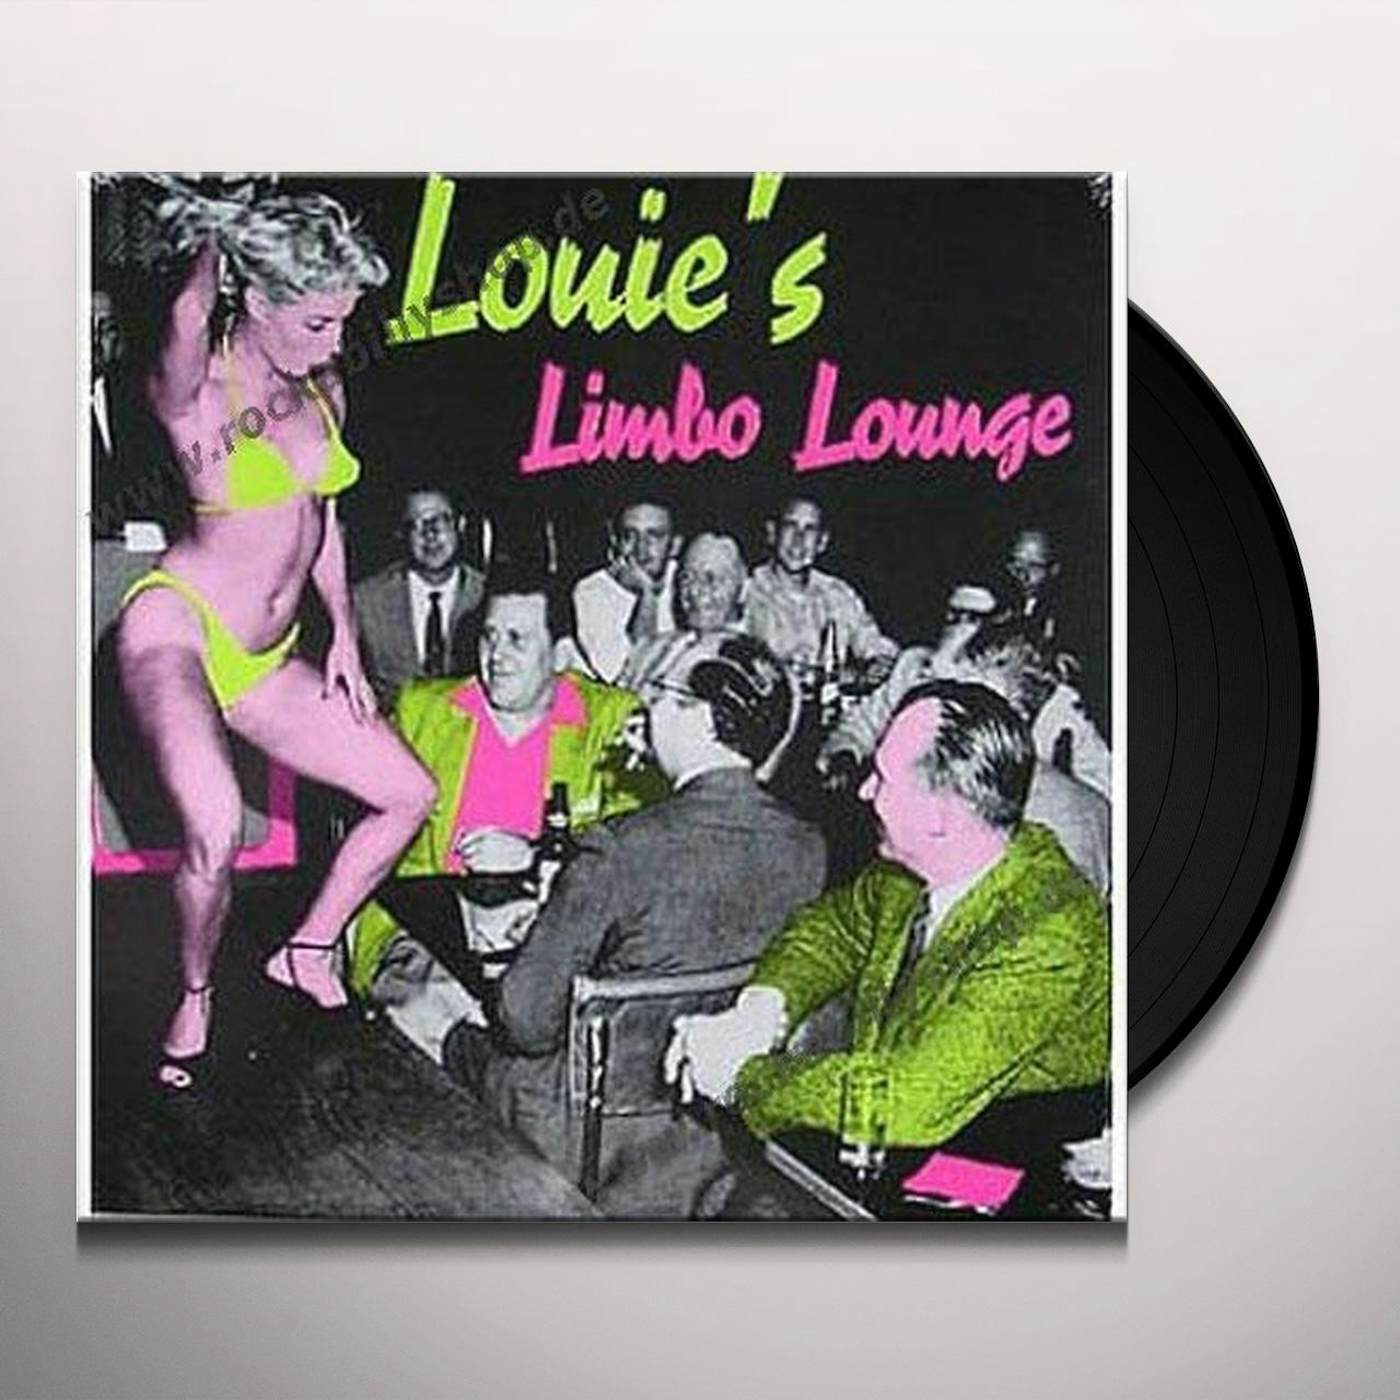 LAS VEGAS GRIND 2 LOUIE'S LIMBO LOUNGE / VAR Vinyl Record